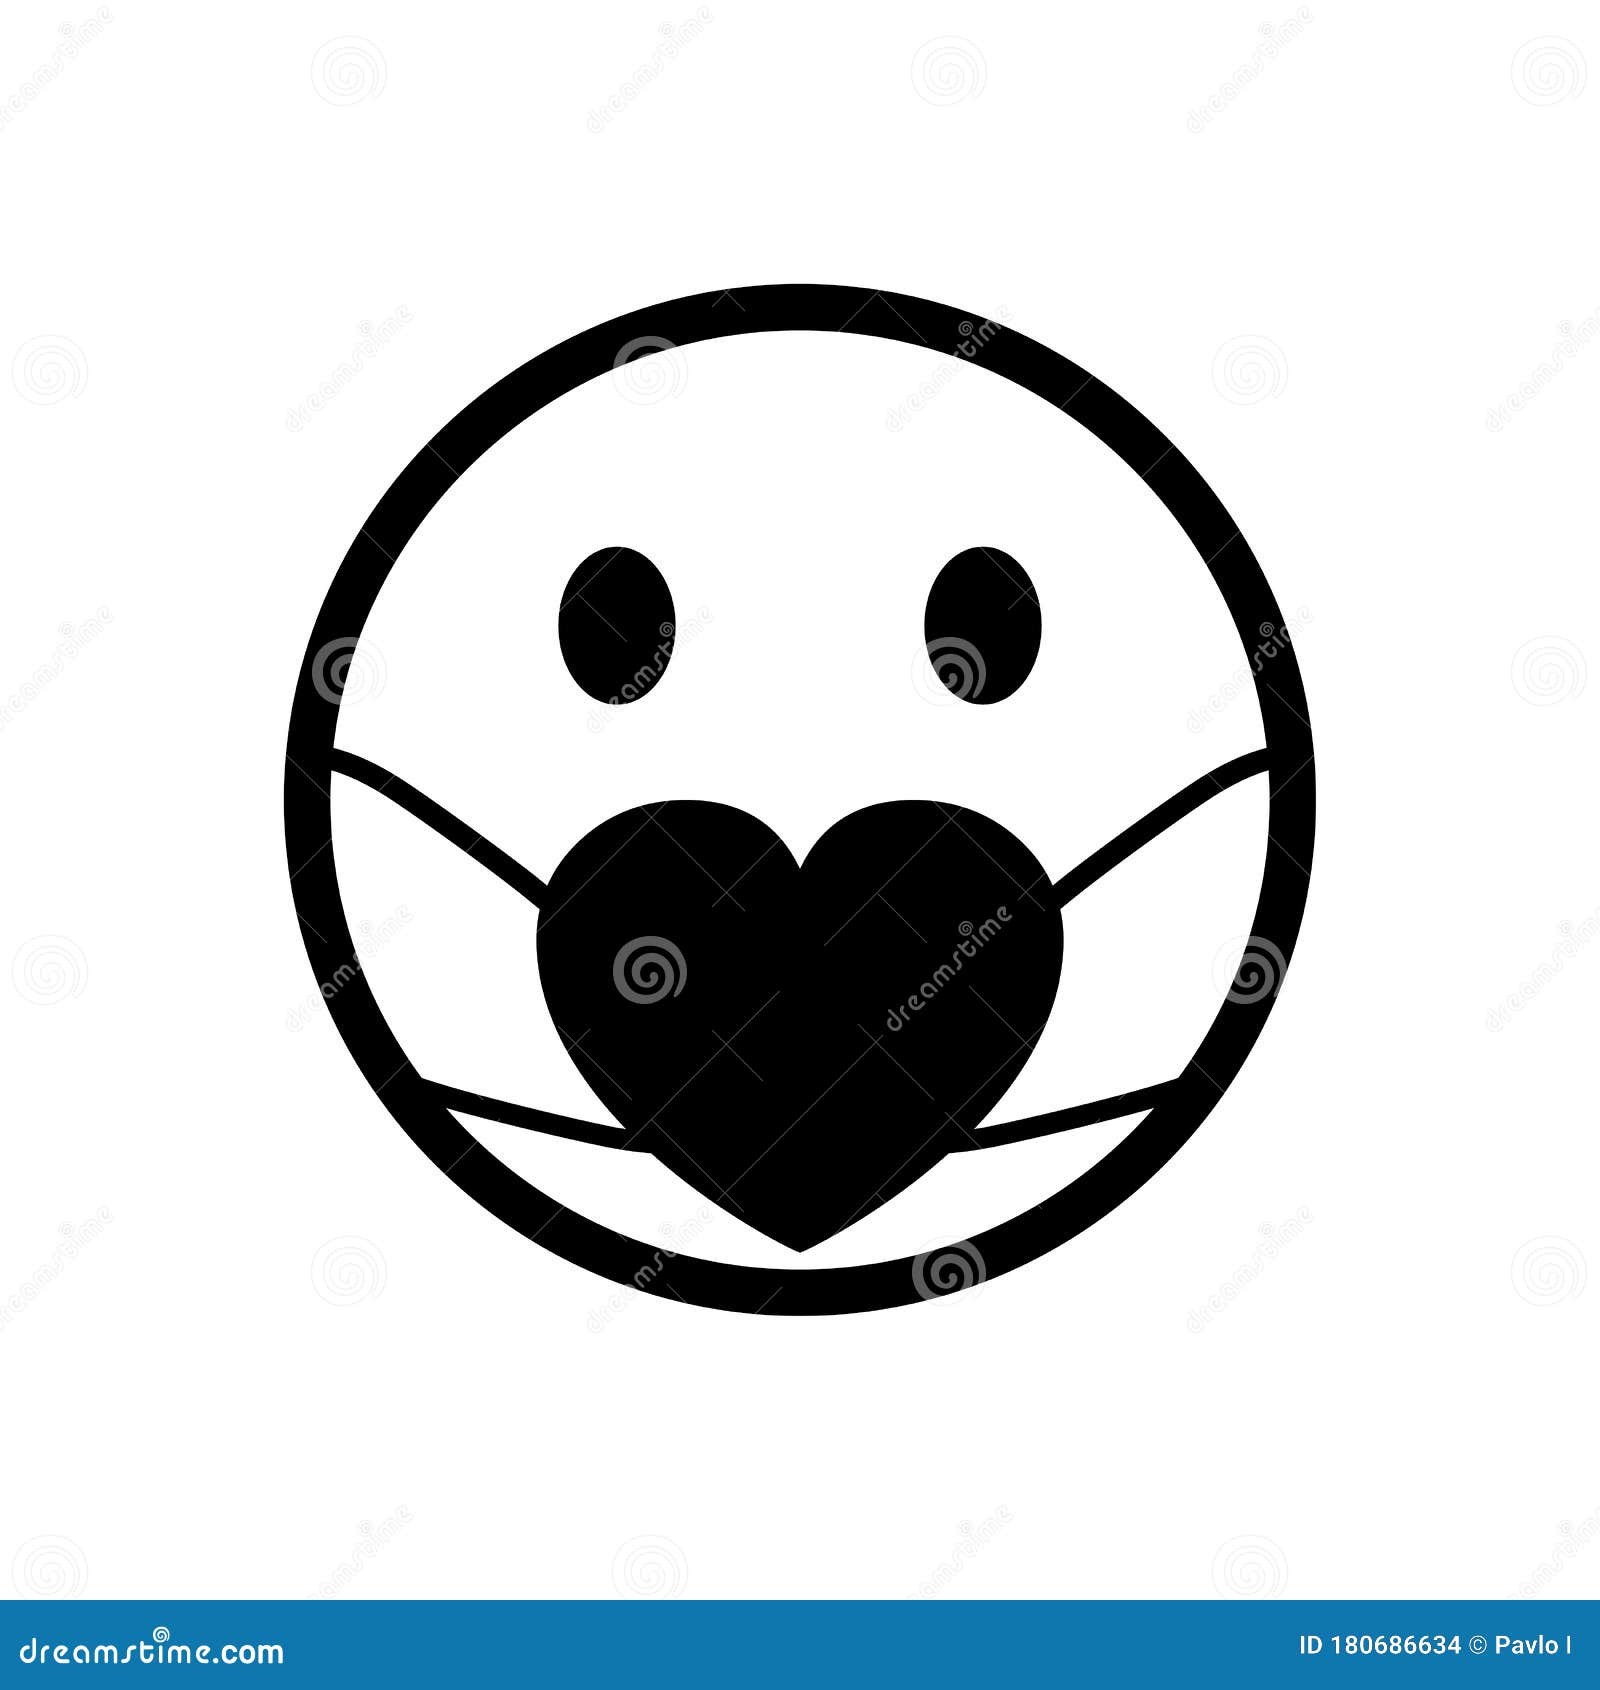 medical masks in heart form on face icon. coronavirus - covid-19, virus contamination, pollution, antivirus